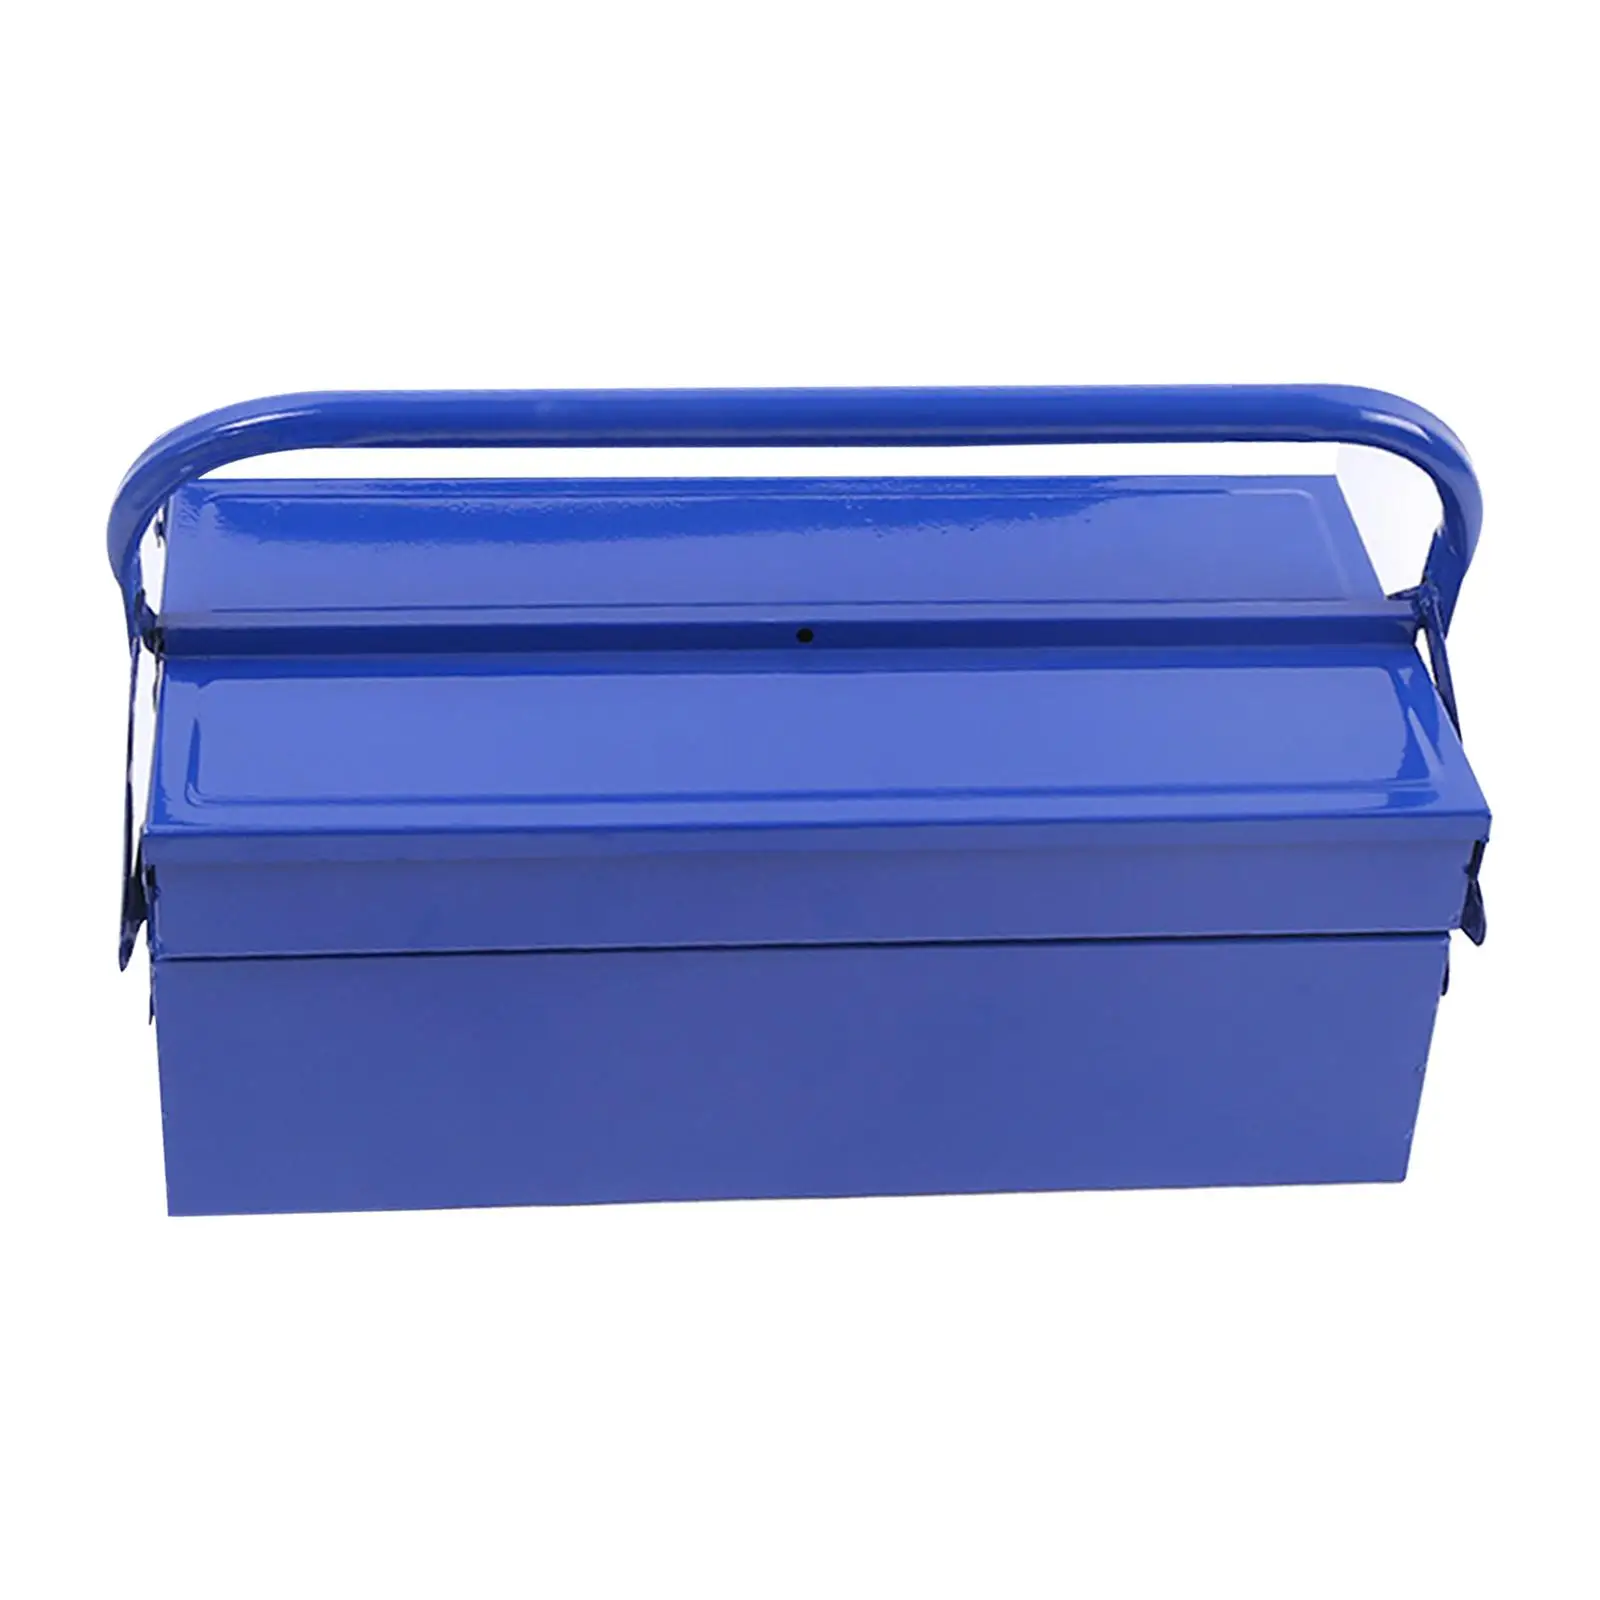 Toolbox Storage Box Iron Durable Multipurpose for Plumber Mechanical Repairs